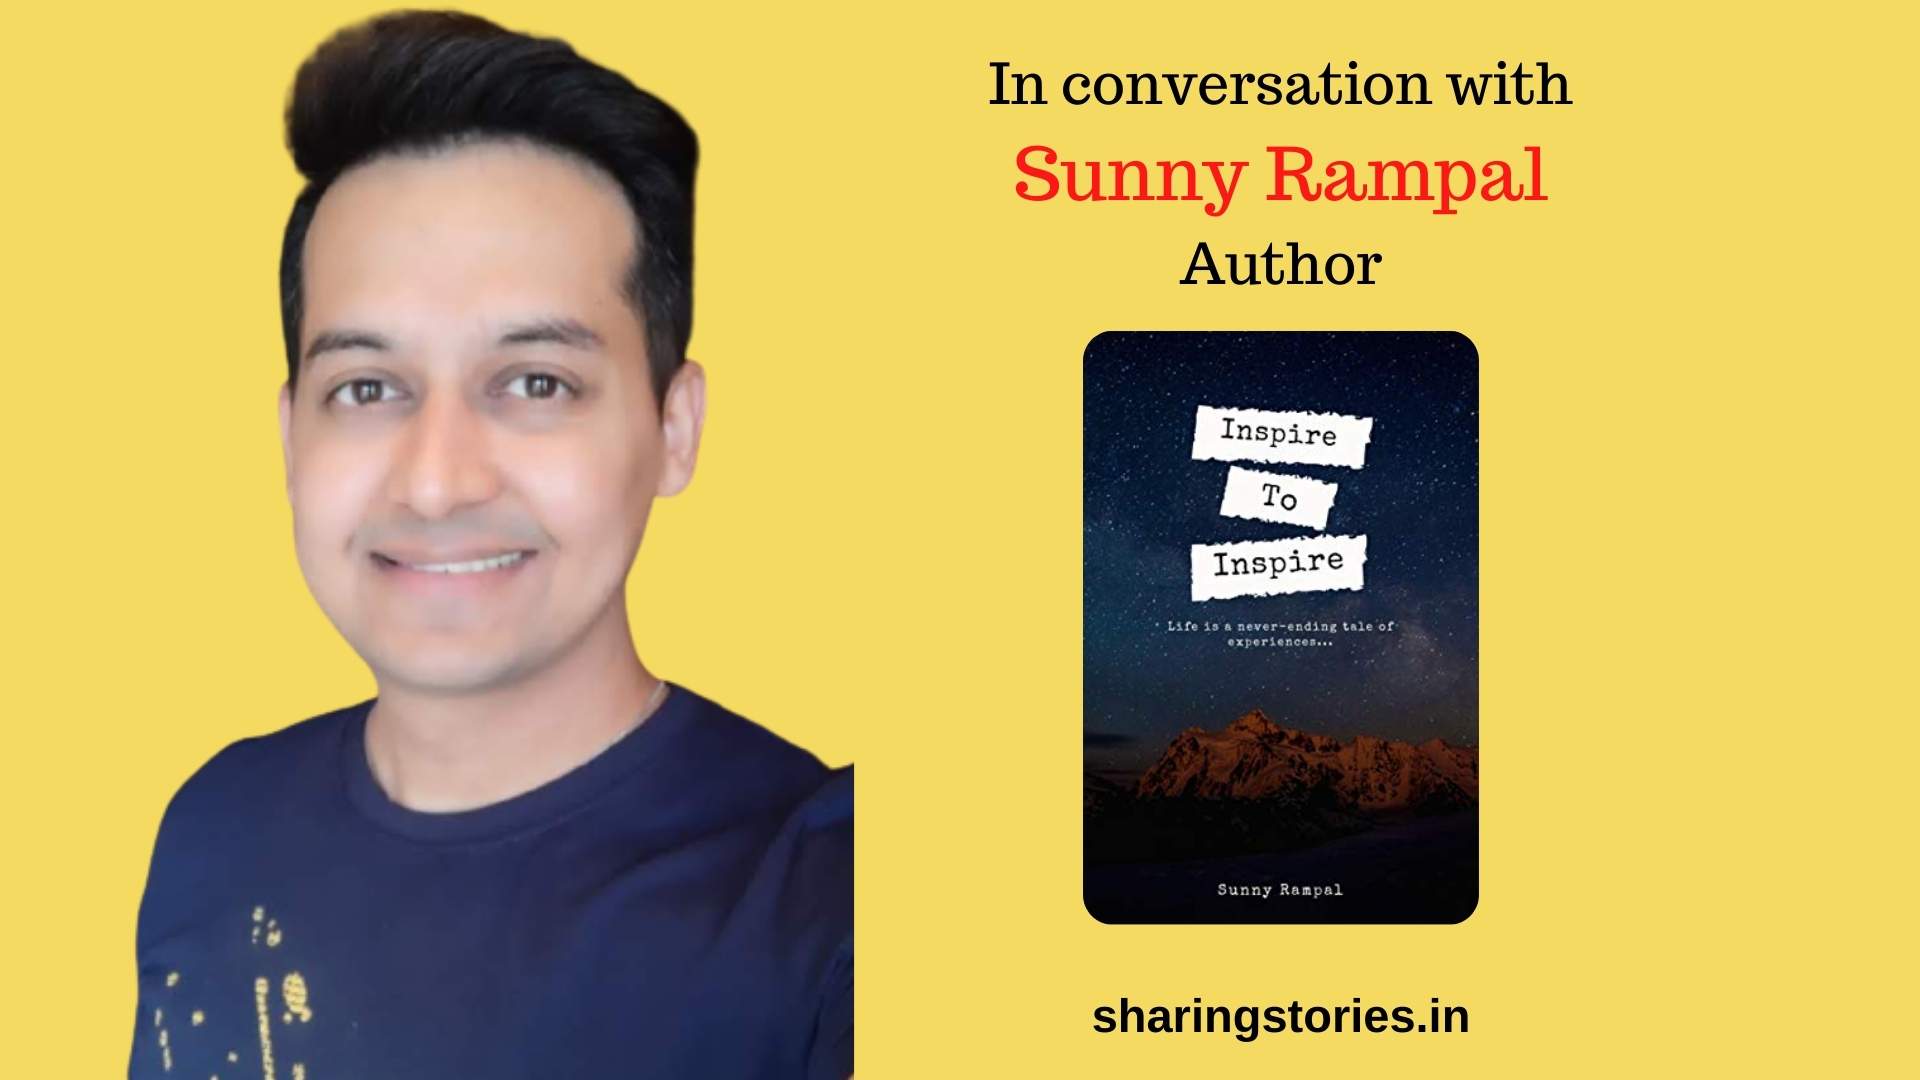 Author Sunny Rampal